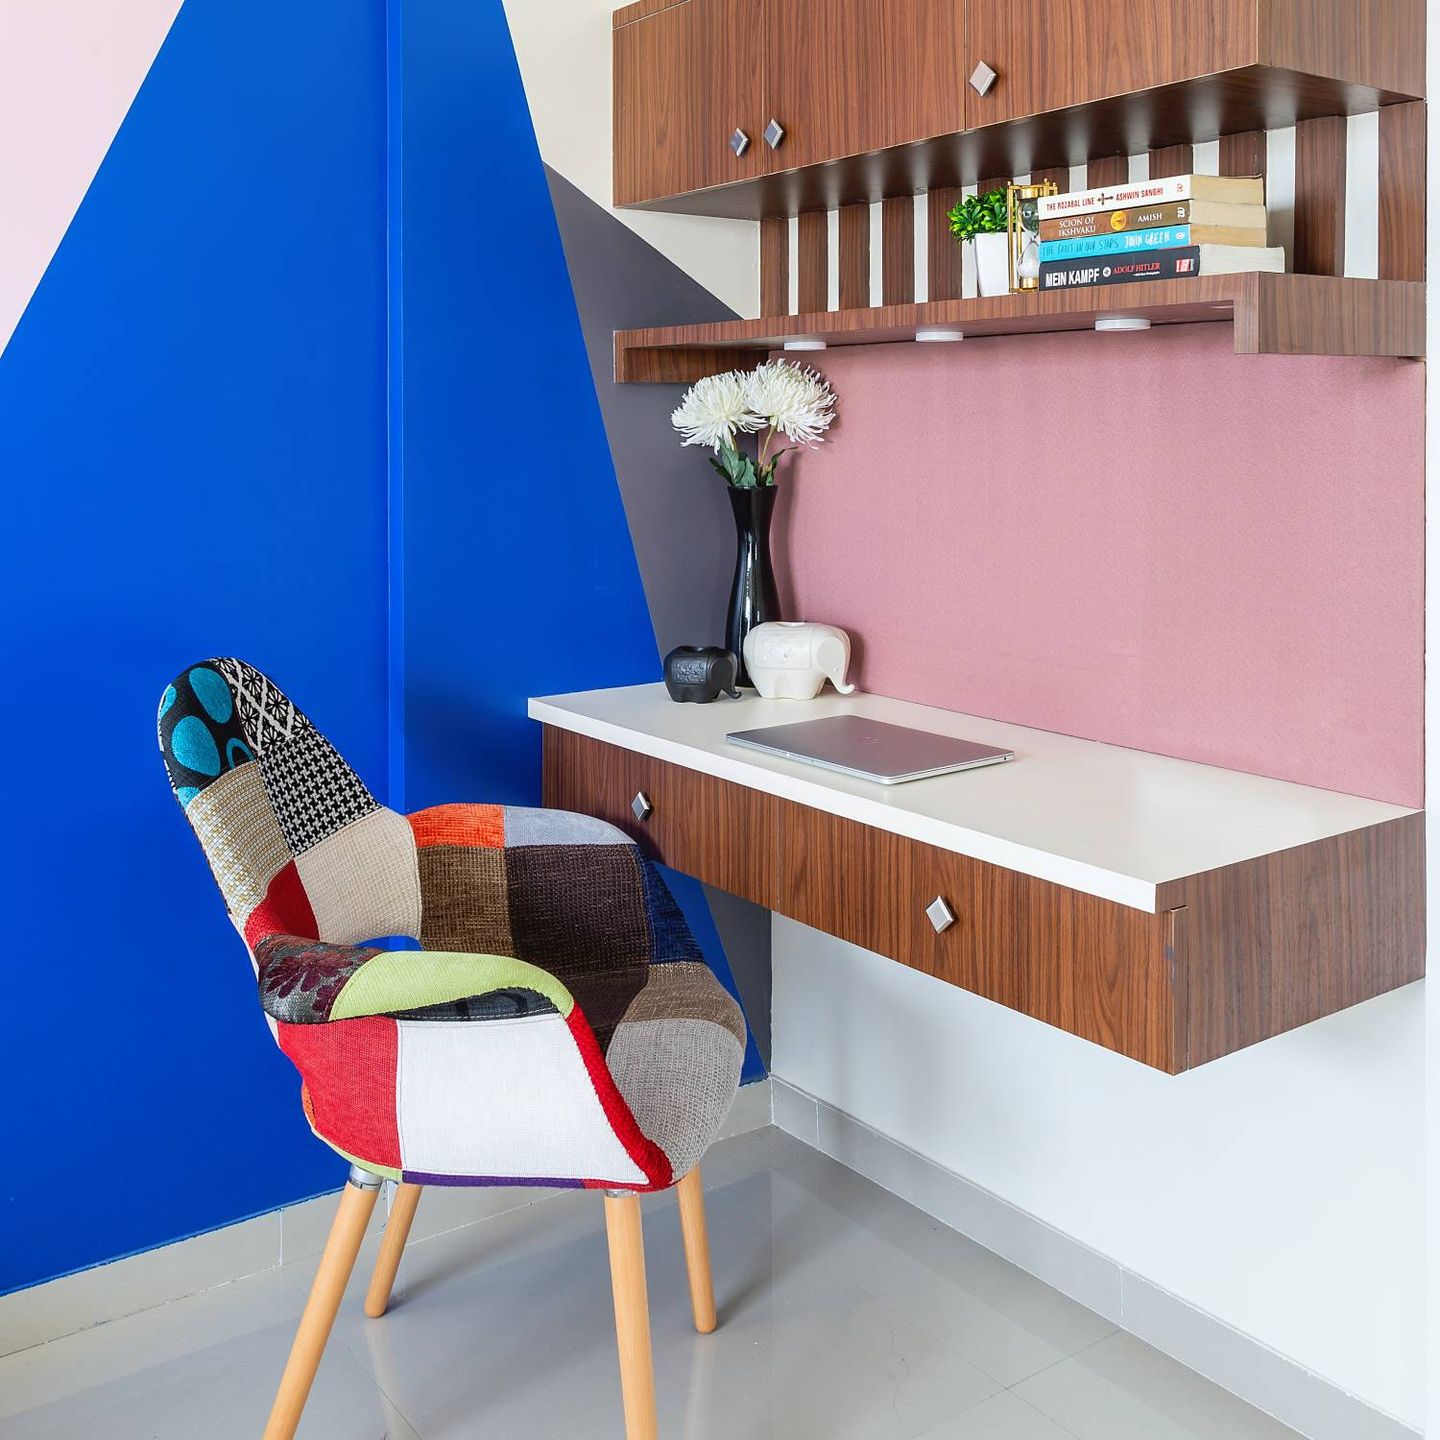 Walnut-Toned Study Room Design With Modern Aesthetics - Livspace